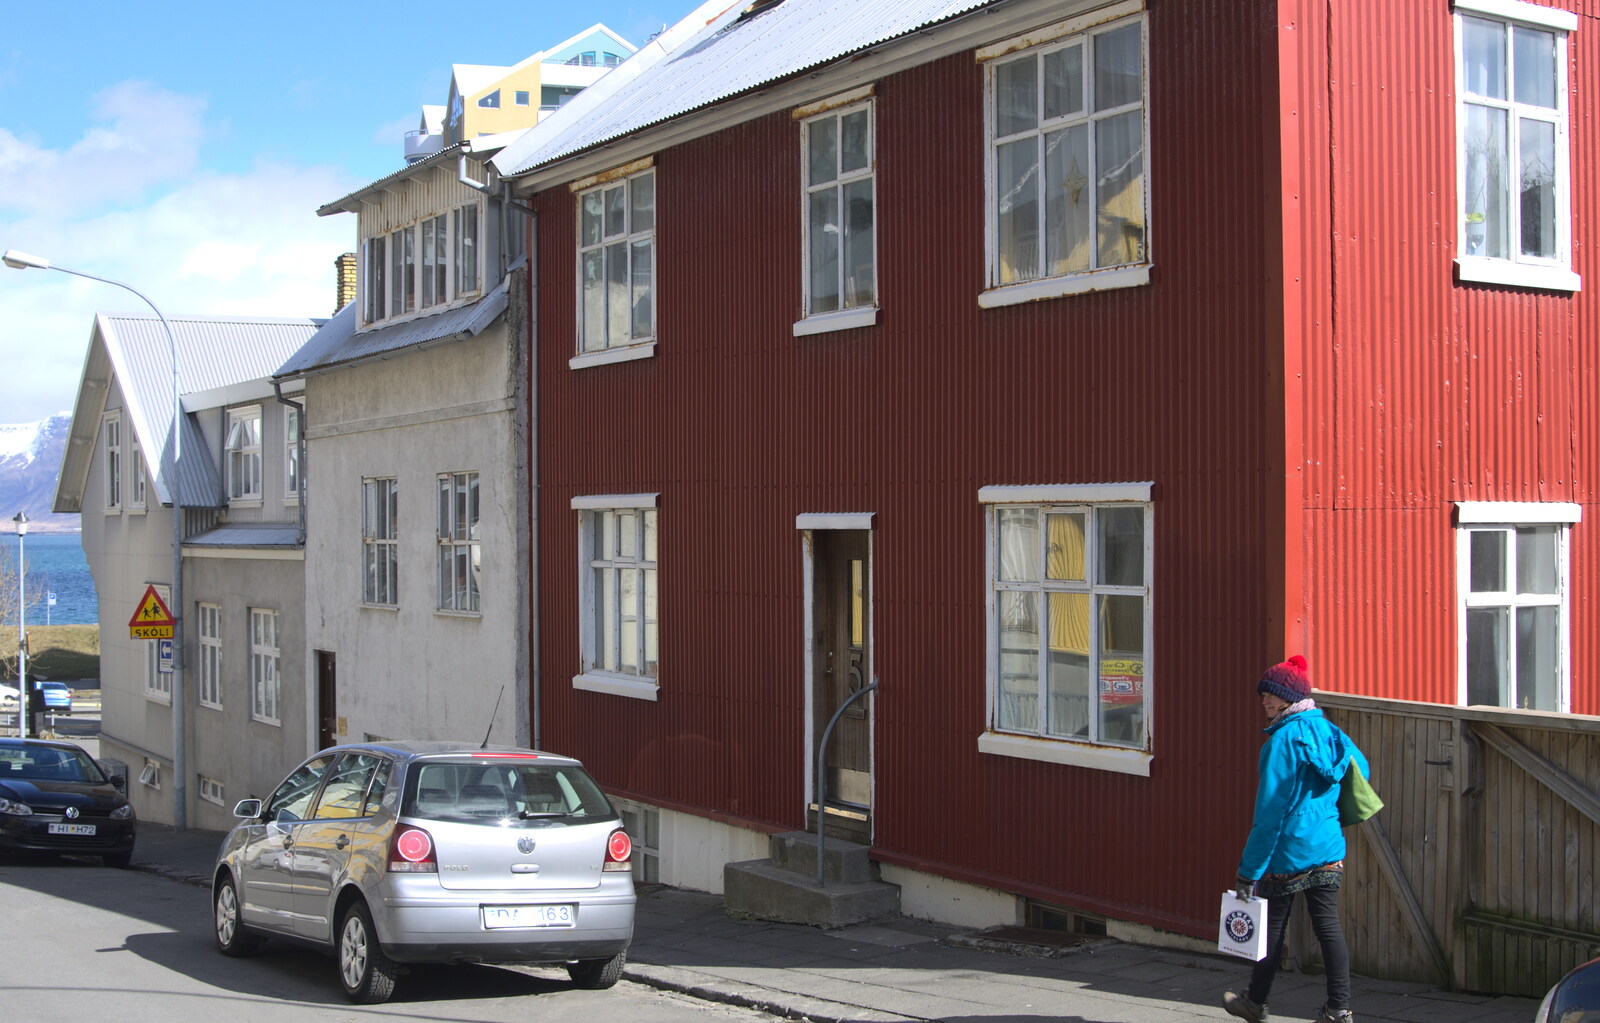 Isobel walks past a red corrugated house from Stríðsminjar War Relics, Perlan and Street Art, Reykjavik, Iceland - 23rd April 2017